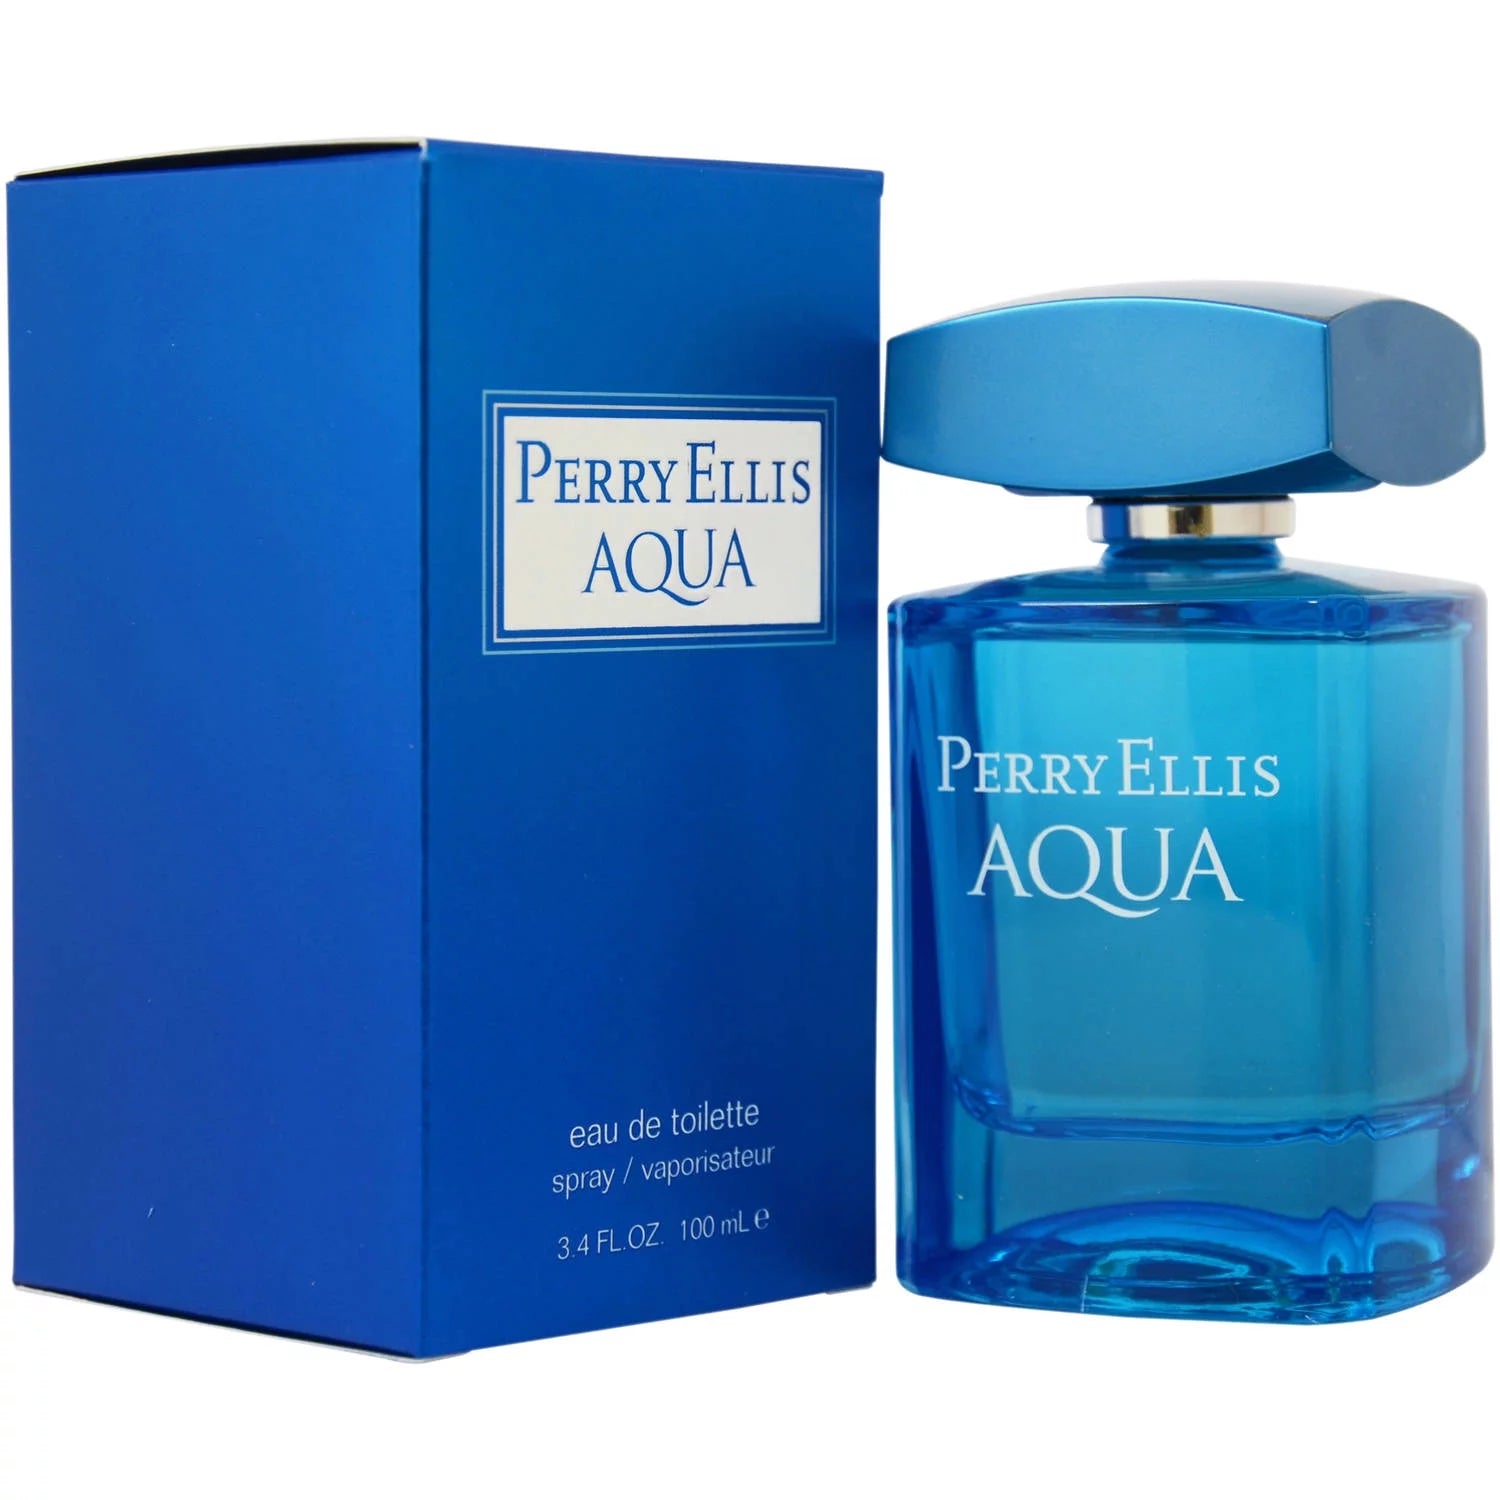 Aqua by Perry Ellis 3.4 oz EDT Spray for Men